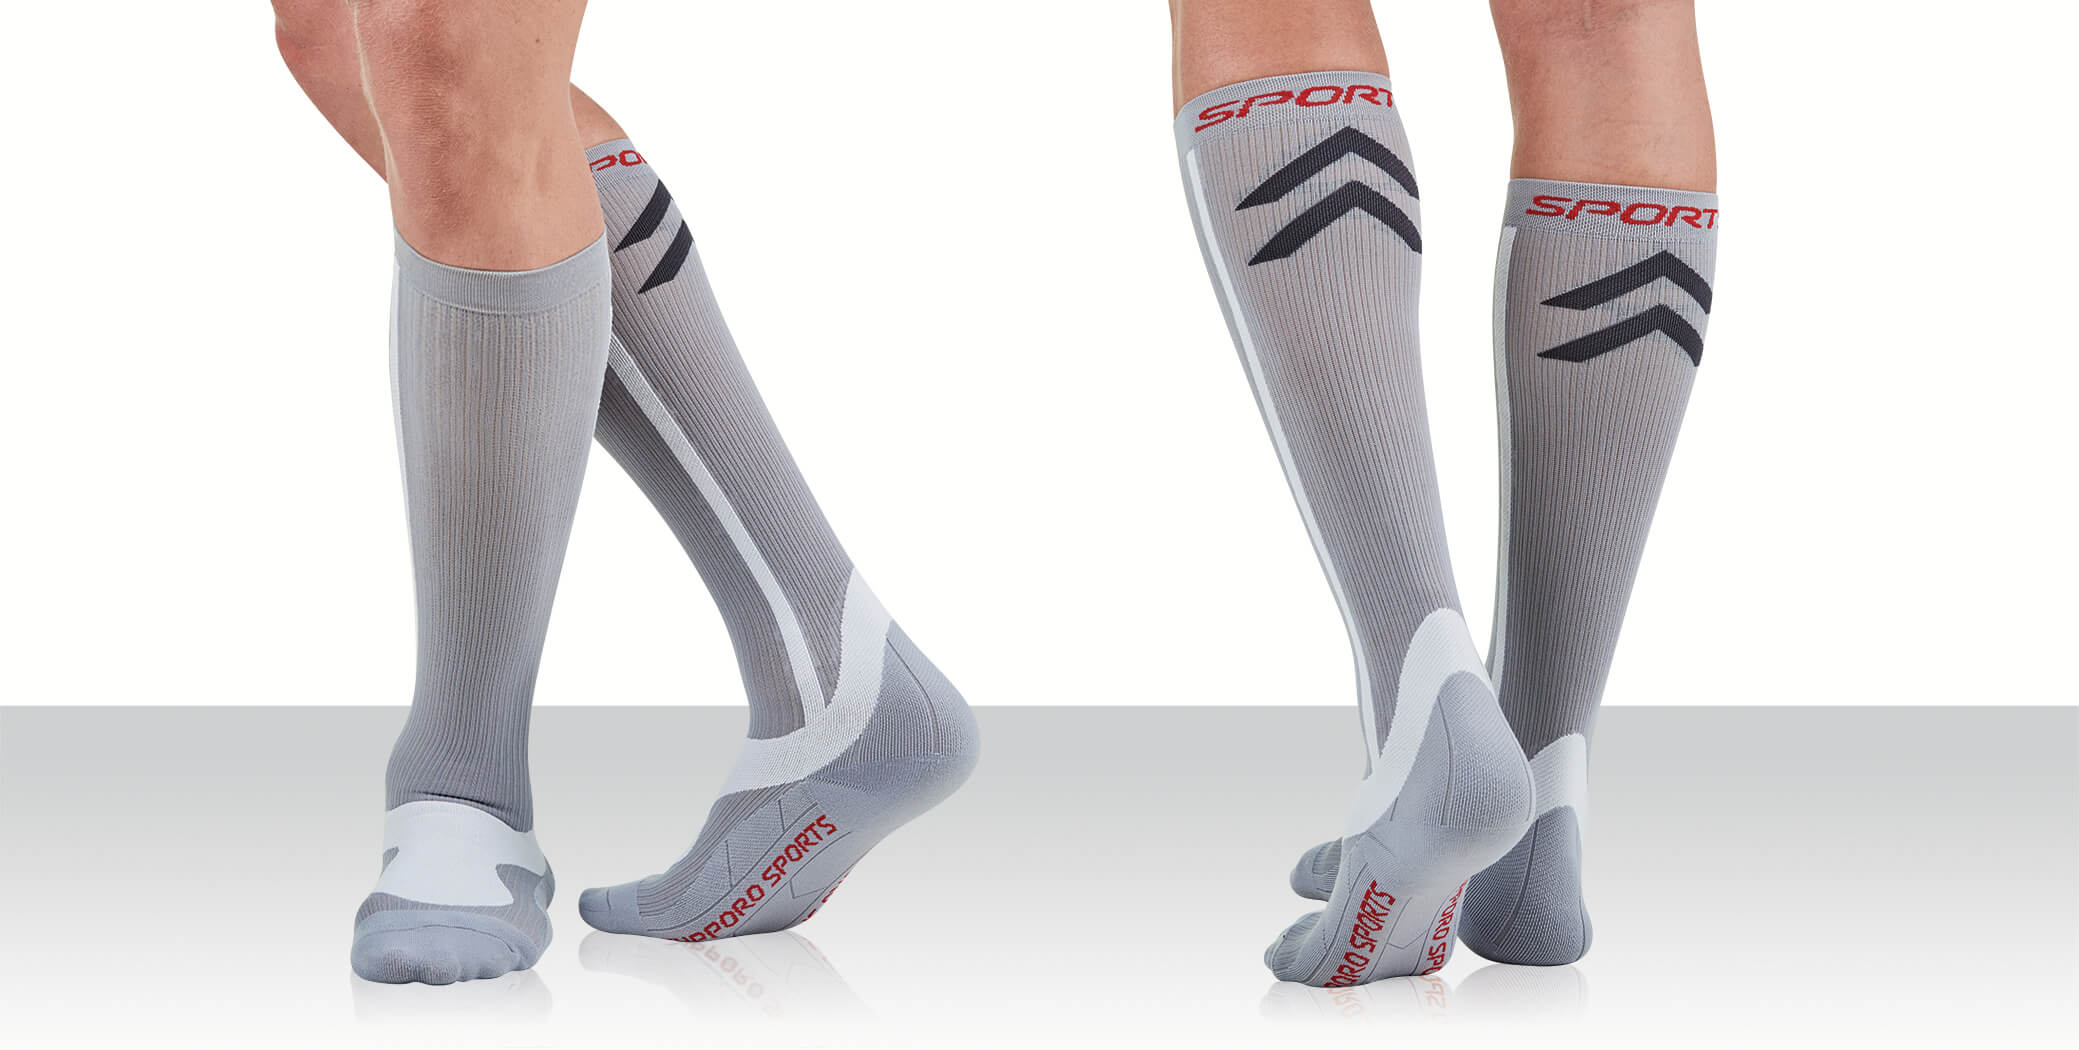 https://www.masdelinc.com/wp-content/uploads/2018/09/800510-sport-sock-product-shot.jpg